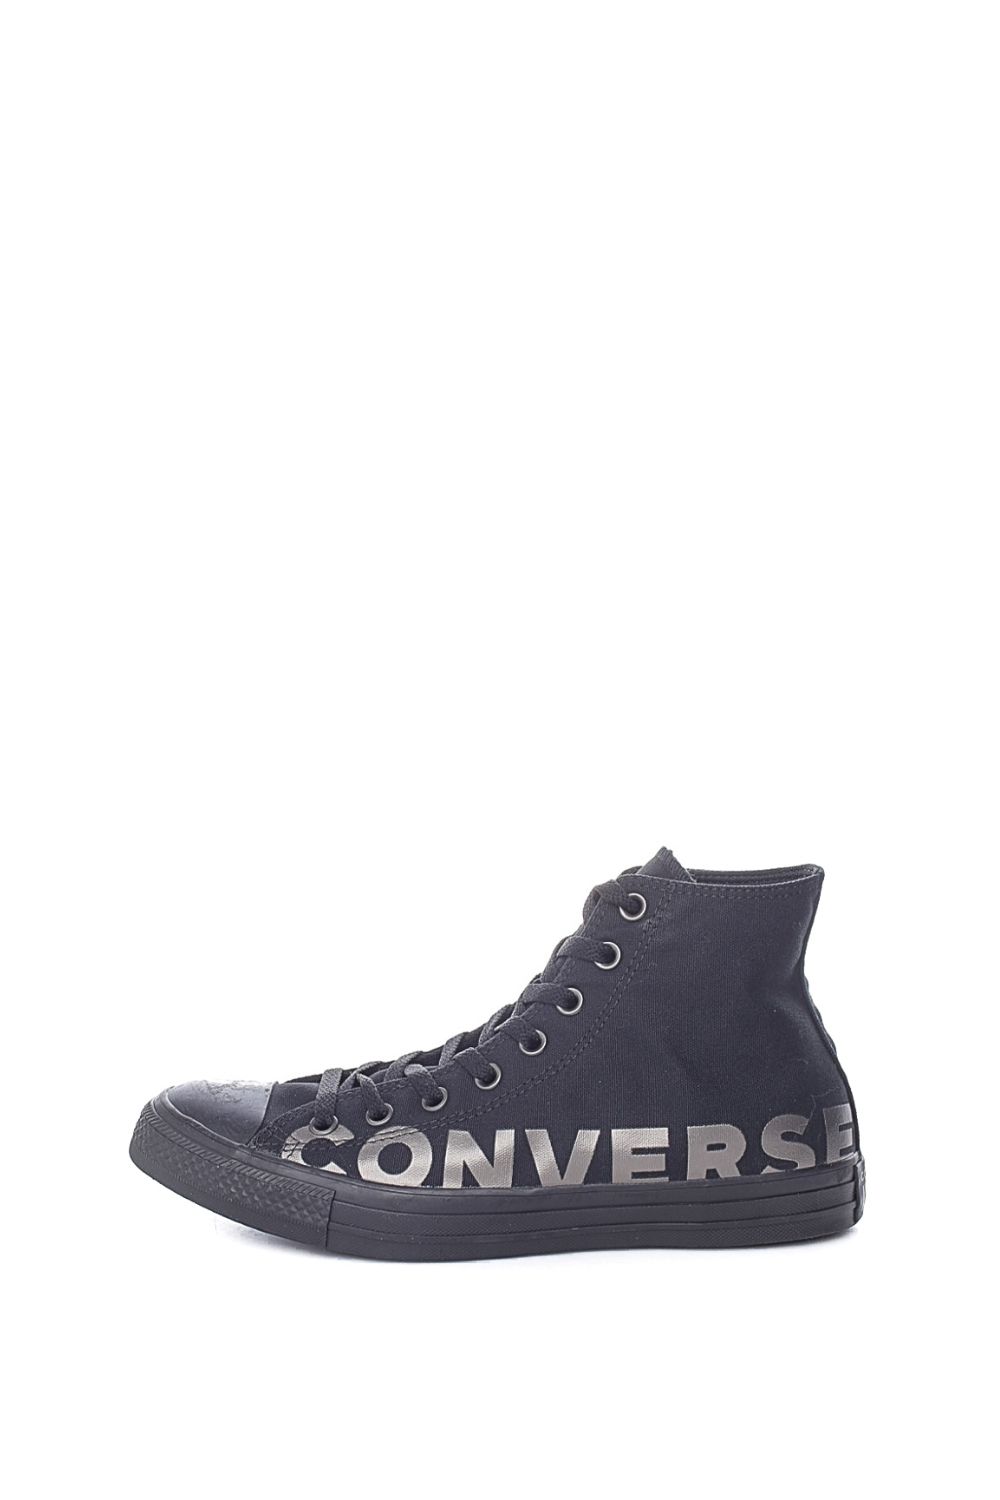 CONVERSE - Unisex sneakers μποτάκια CONVERSE Chuck Taylor All Star μαύρα Γυναικεία/Παπούτσια/Sneakers